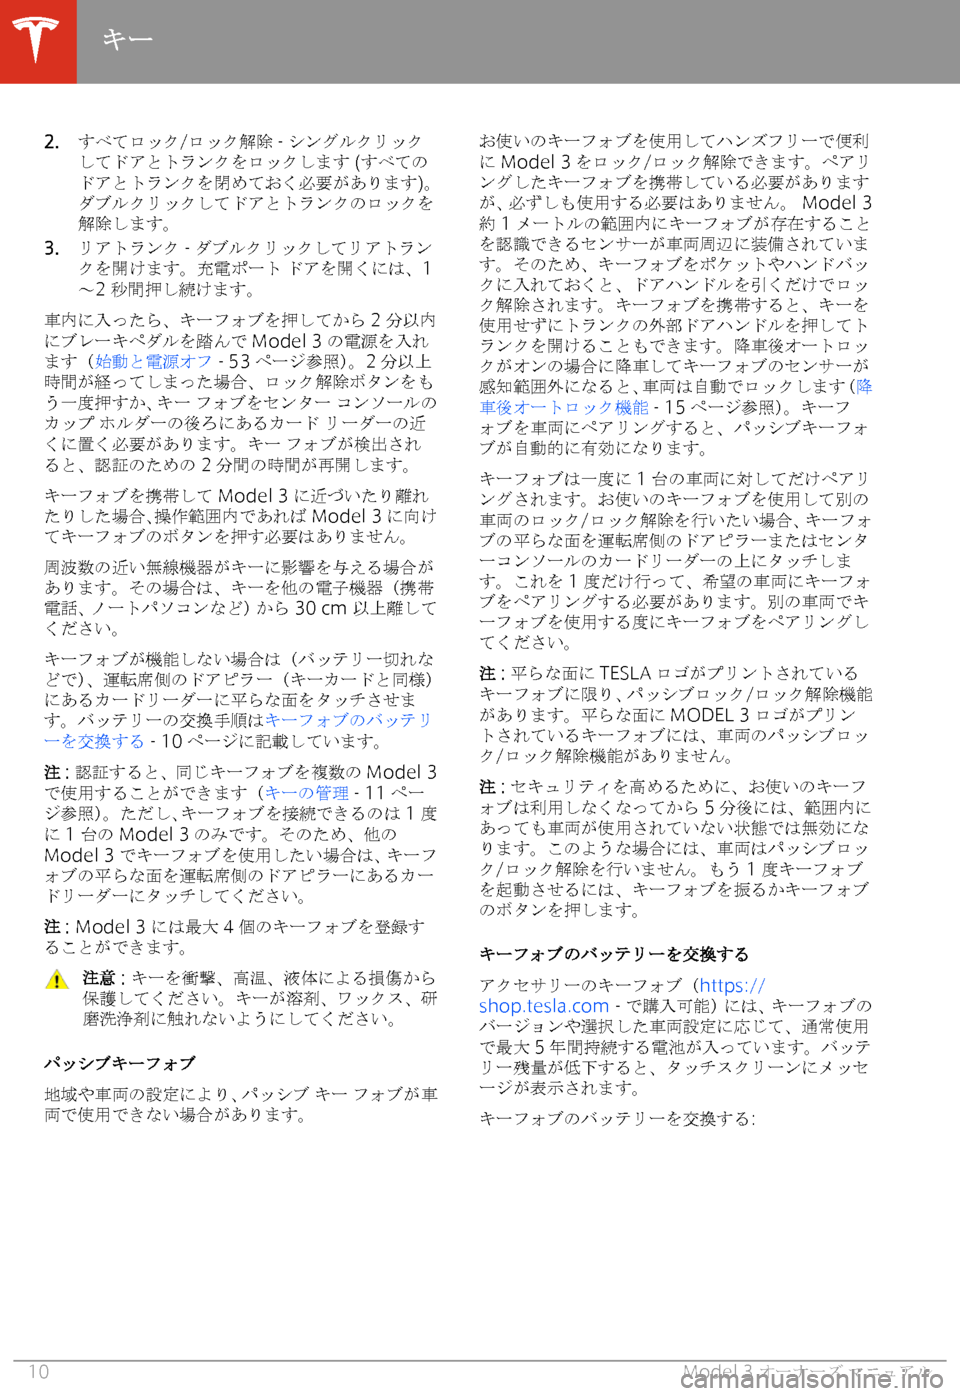 TESLA MODEL 3 2019  取扱説明書 (in Japanese)  �2�.MmZ